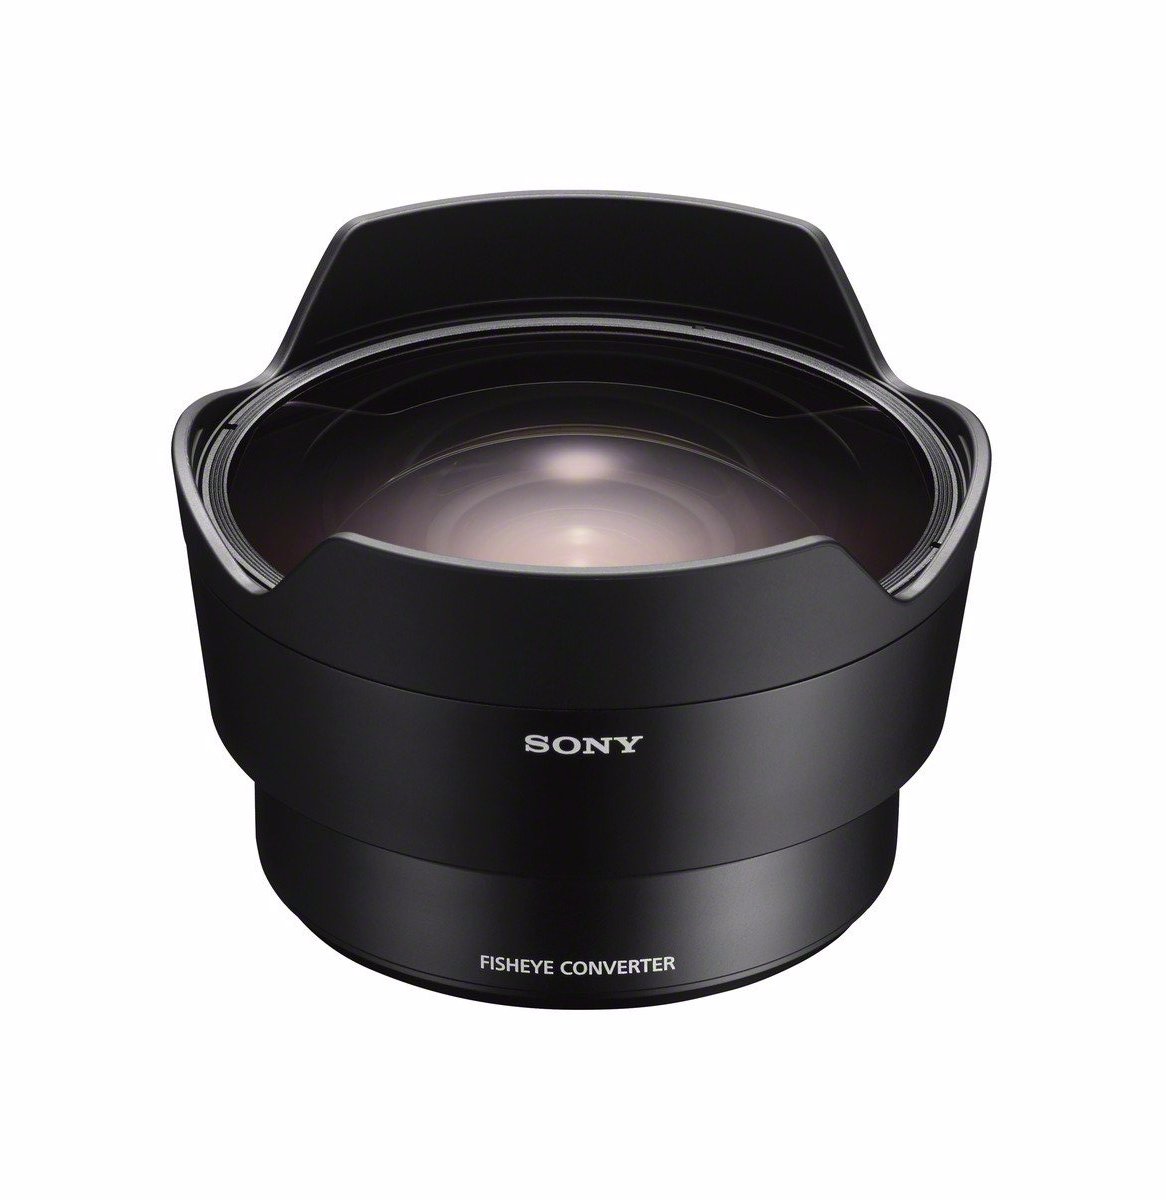 Sony 16mm Fisheye Converter for FE 28mm f/2 Lens, lenses optics & accessories, Sony - Pictureline  - 1